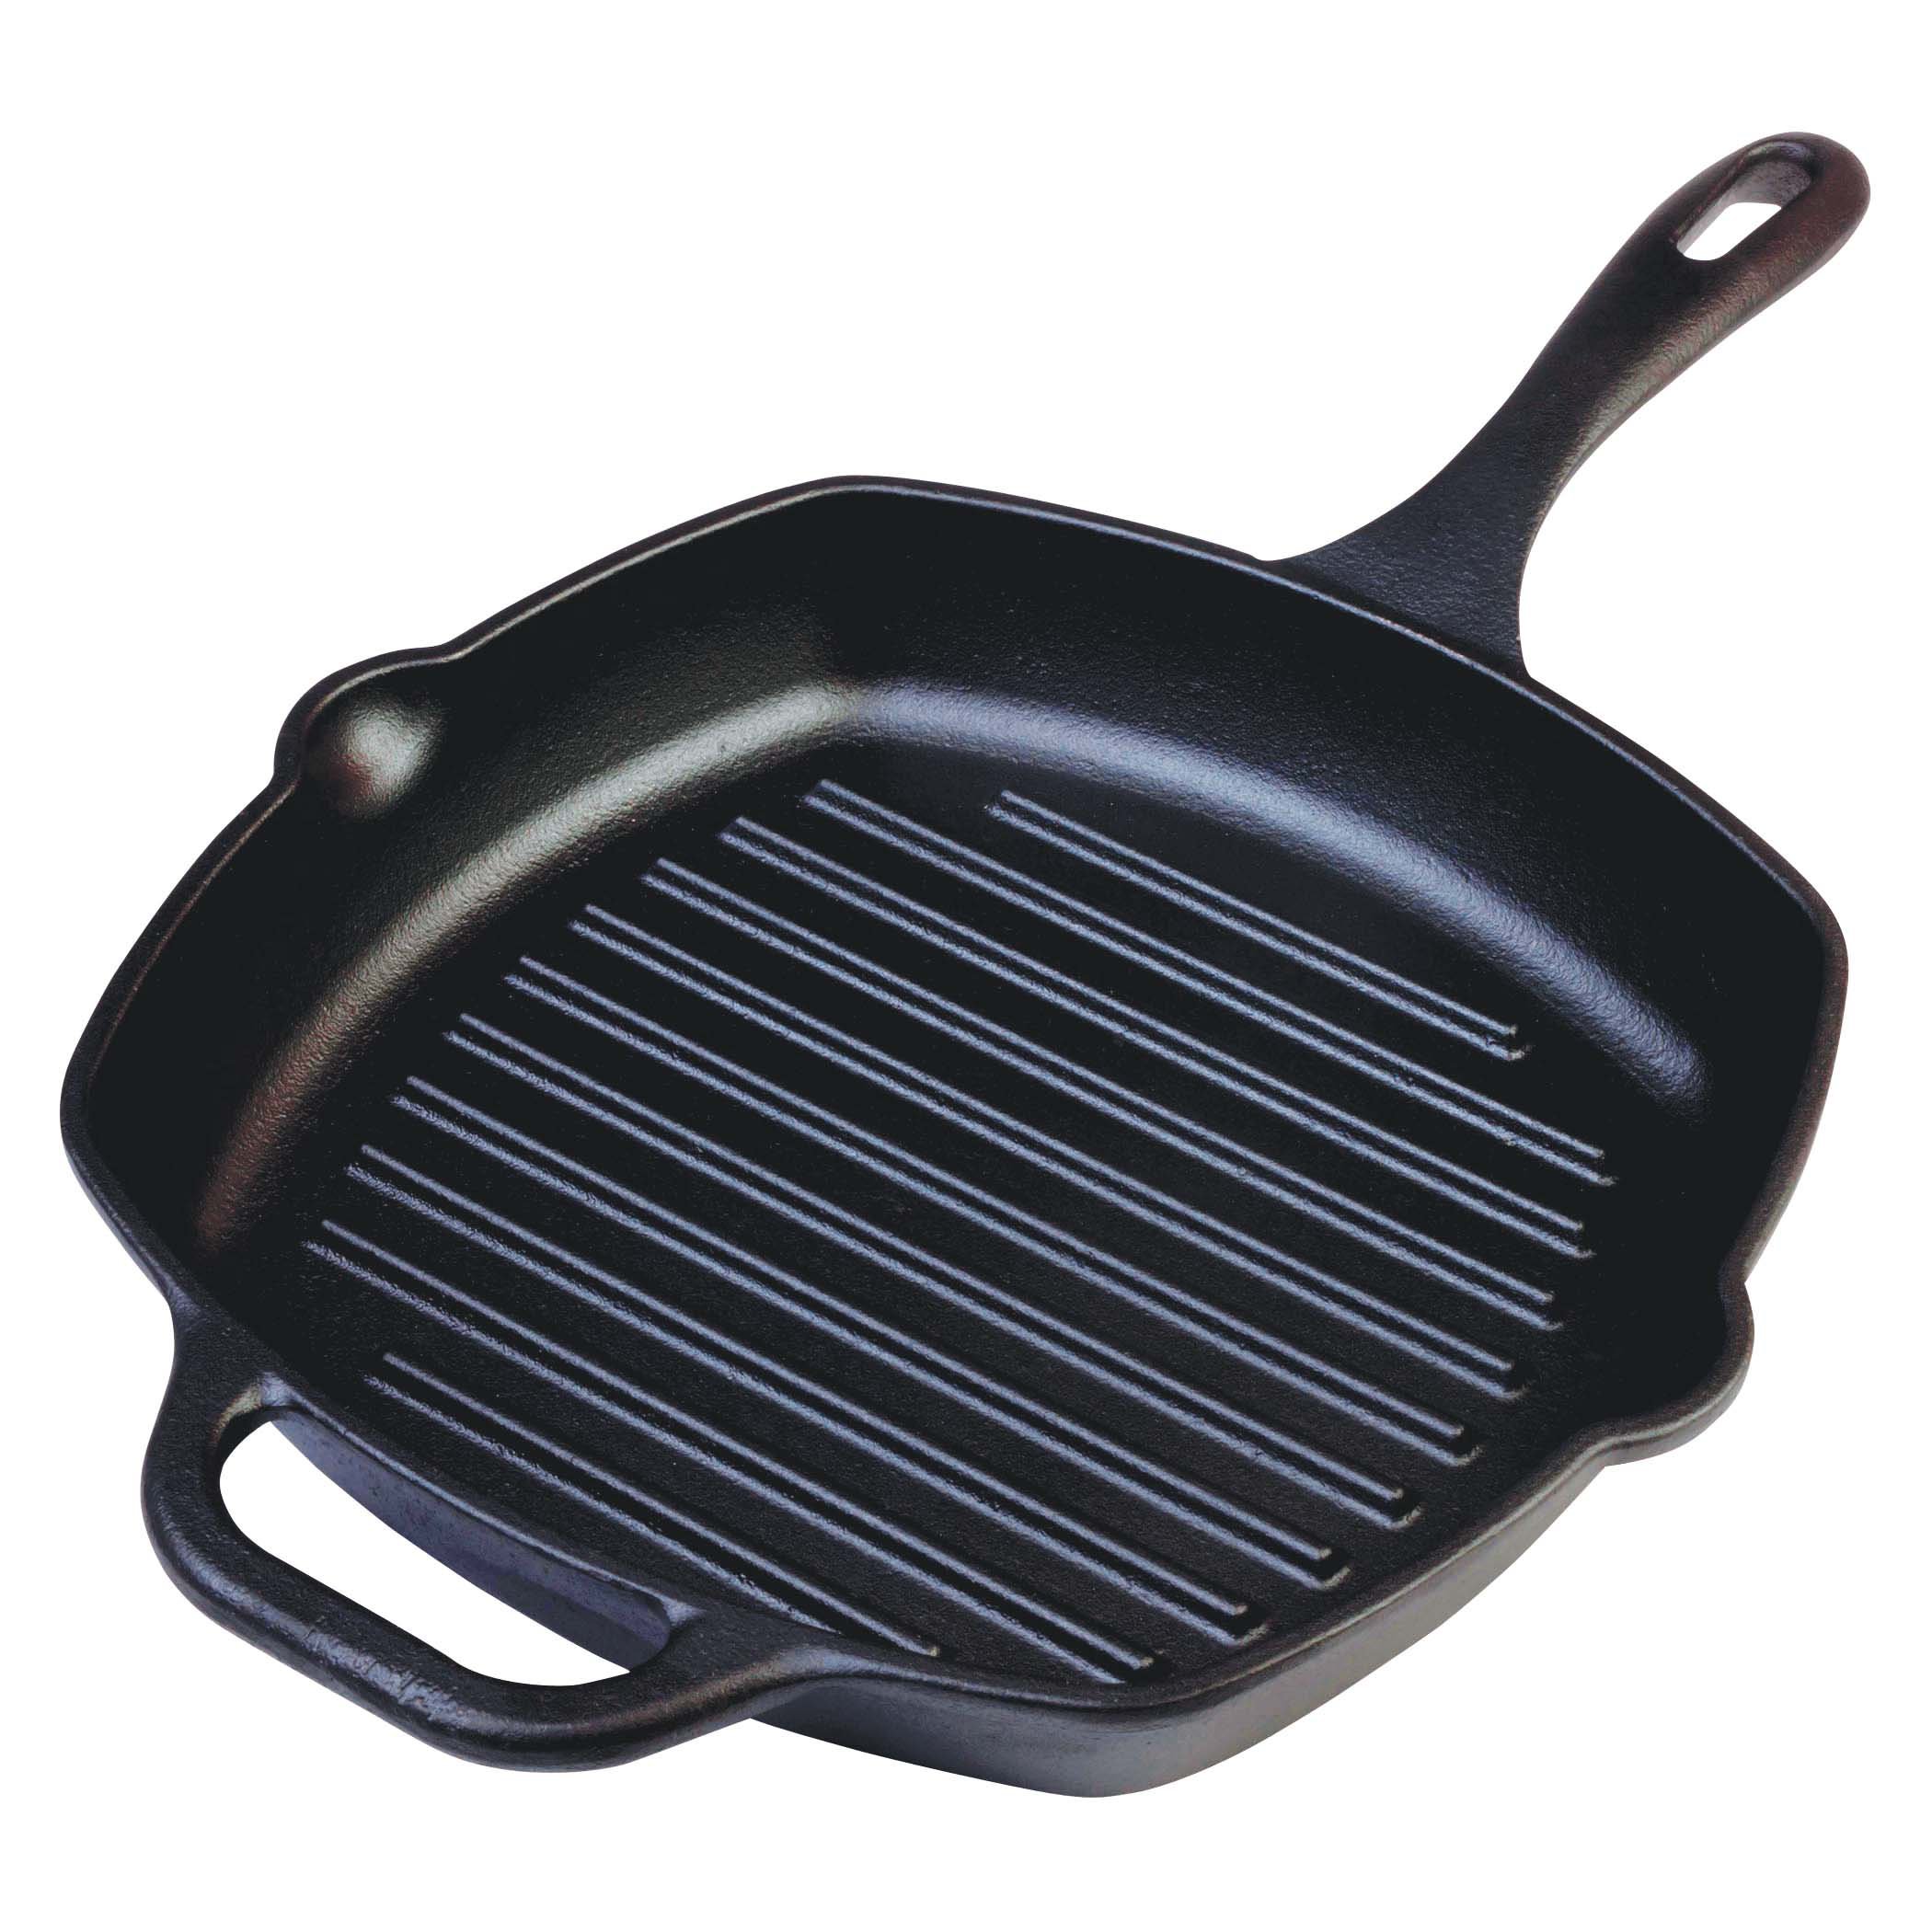 Vonshef Seasoned Cast Iron Griddle Pan Non Stick Square Skillet Large Frying Pan 